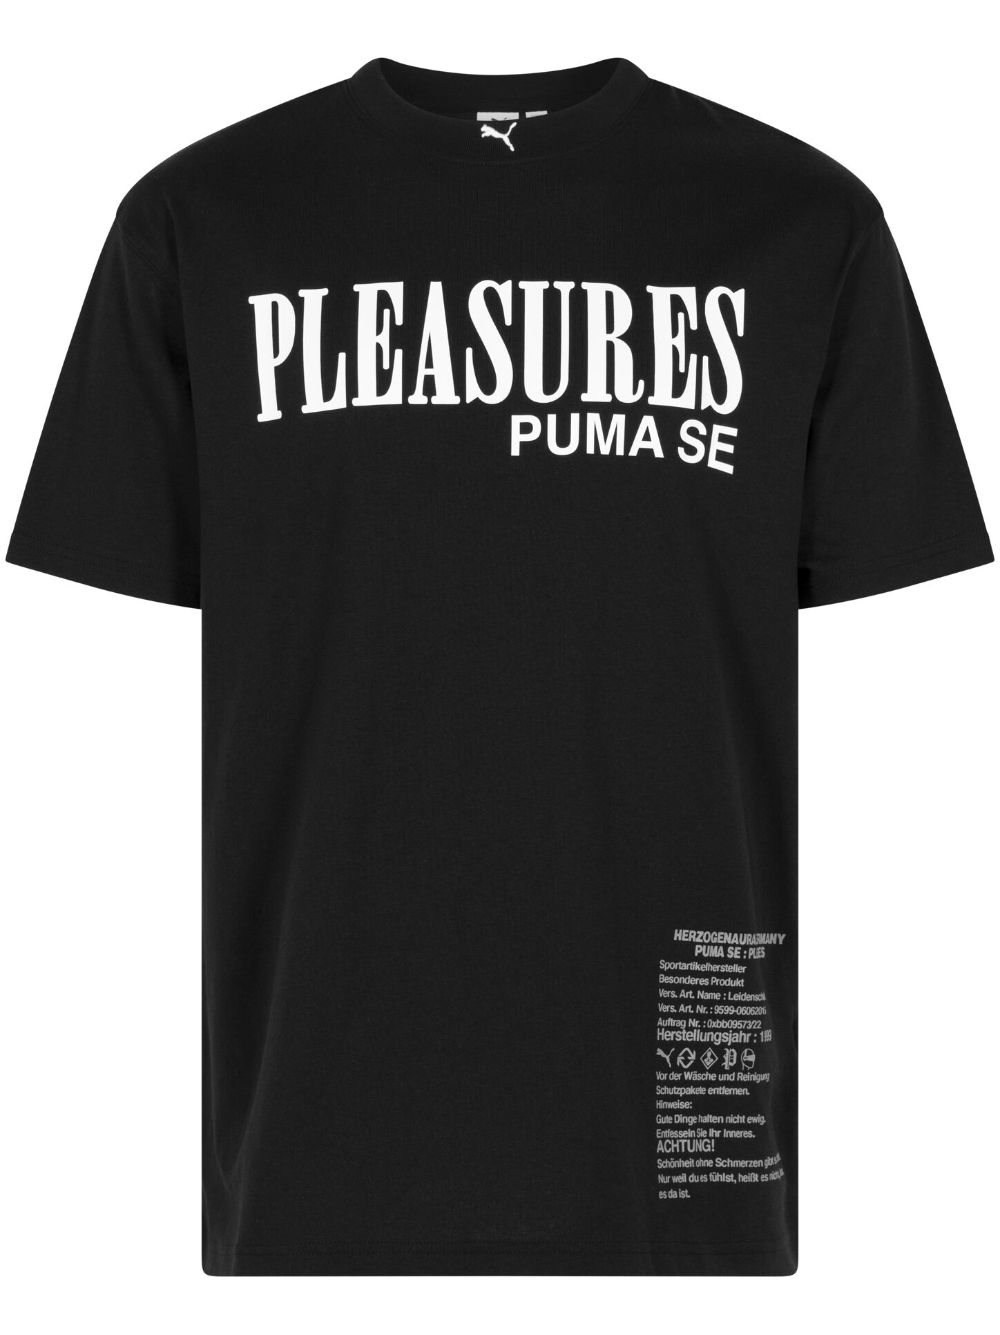 x Pleasures Typo cotton T-shirt